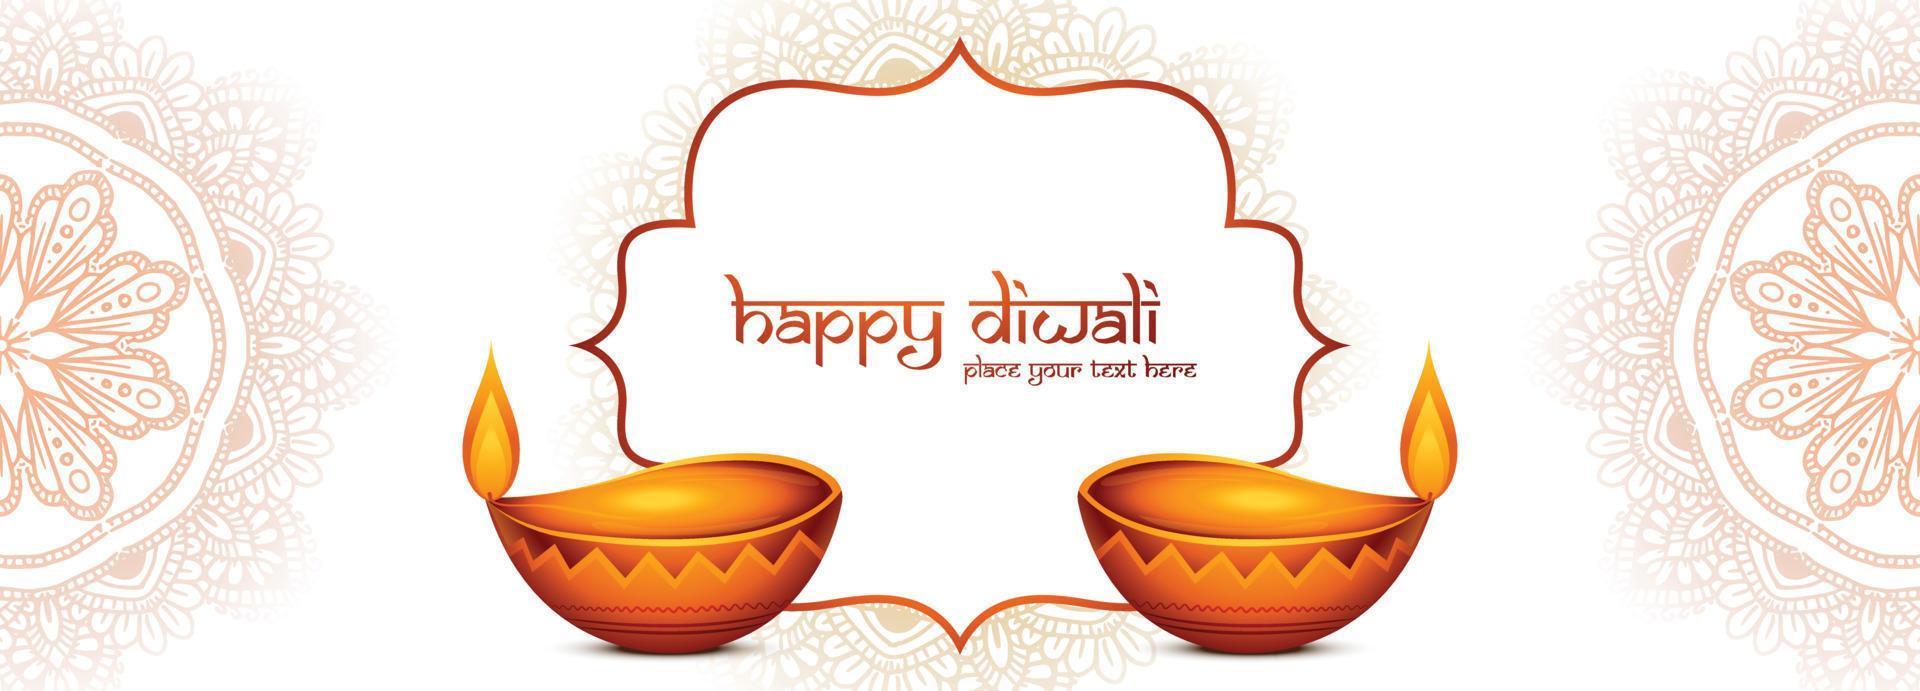 Happy diwali wishes banner with realistic diya celebration holiday ...